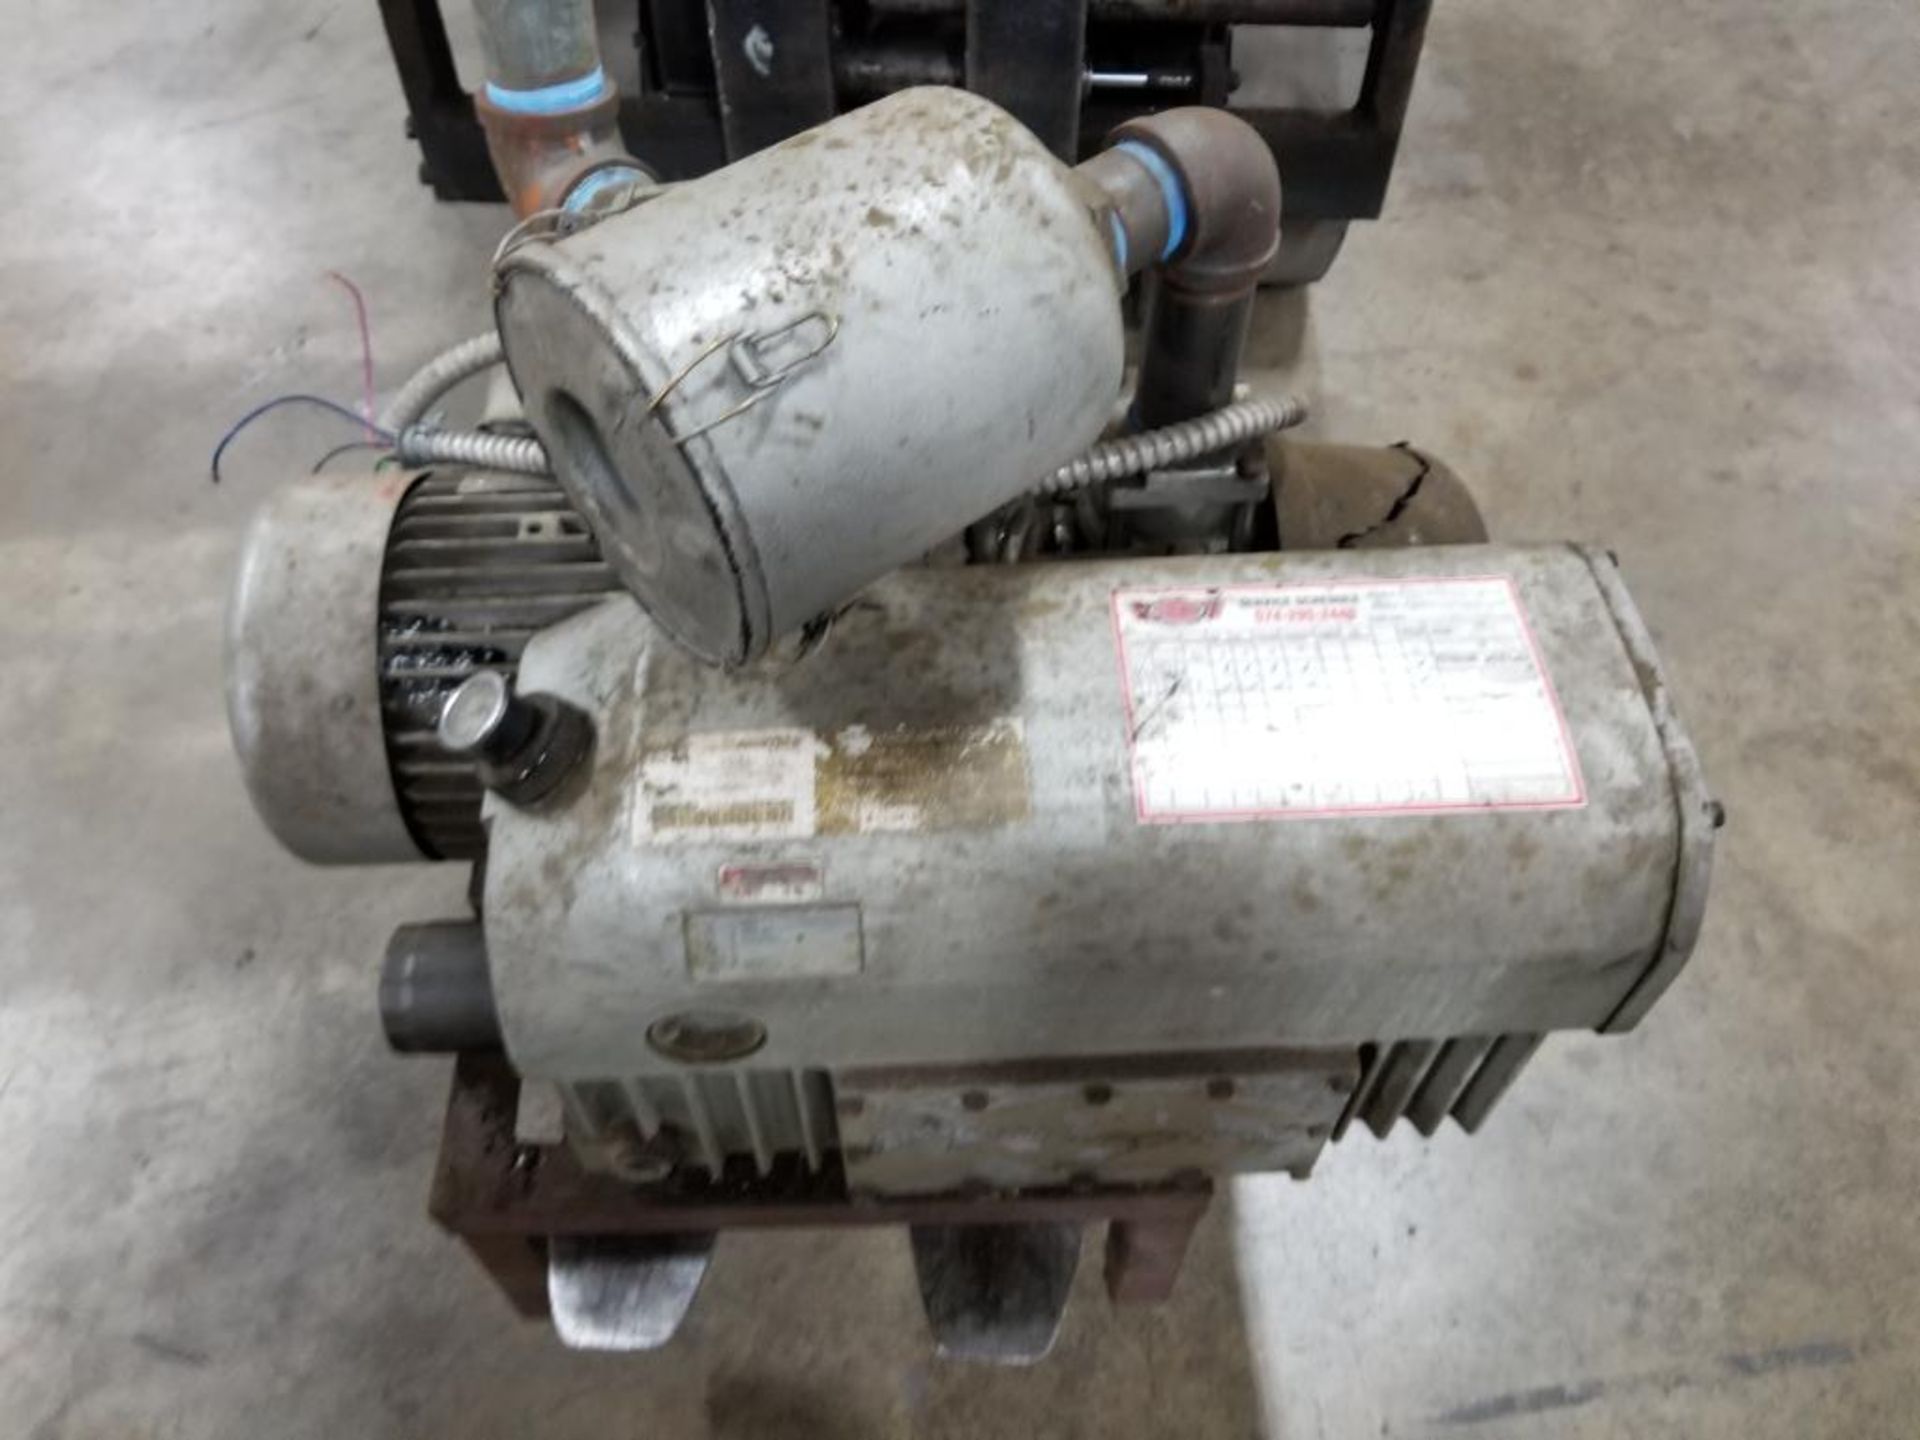 Busch vacuum pump. Type RC-0160.